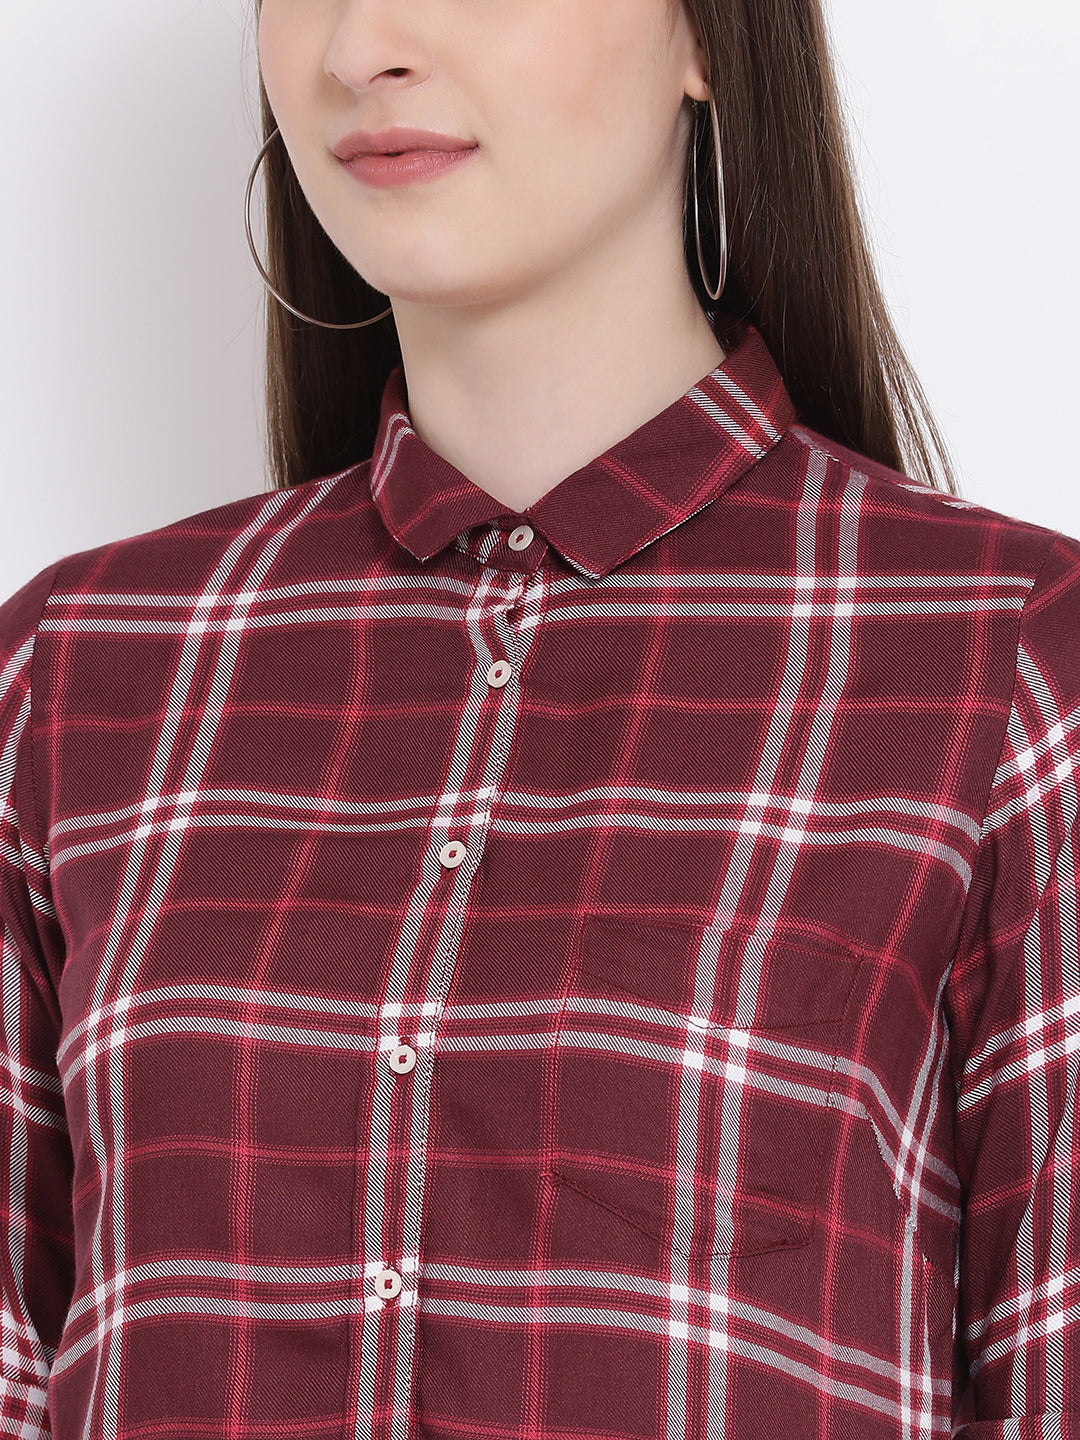 Maroon Checked Spread Collar Slim Fit Shirt - Women Shirts